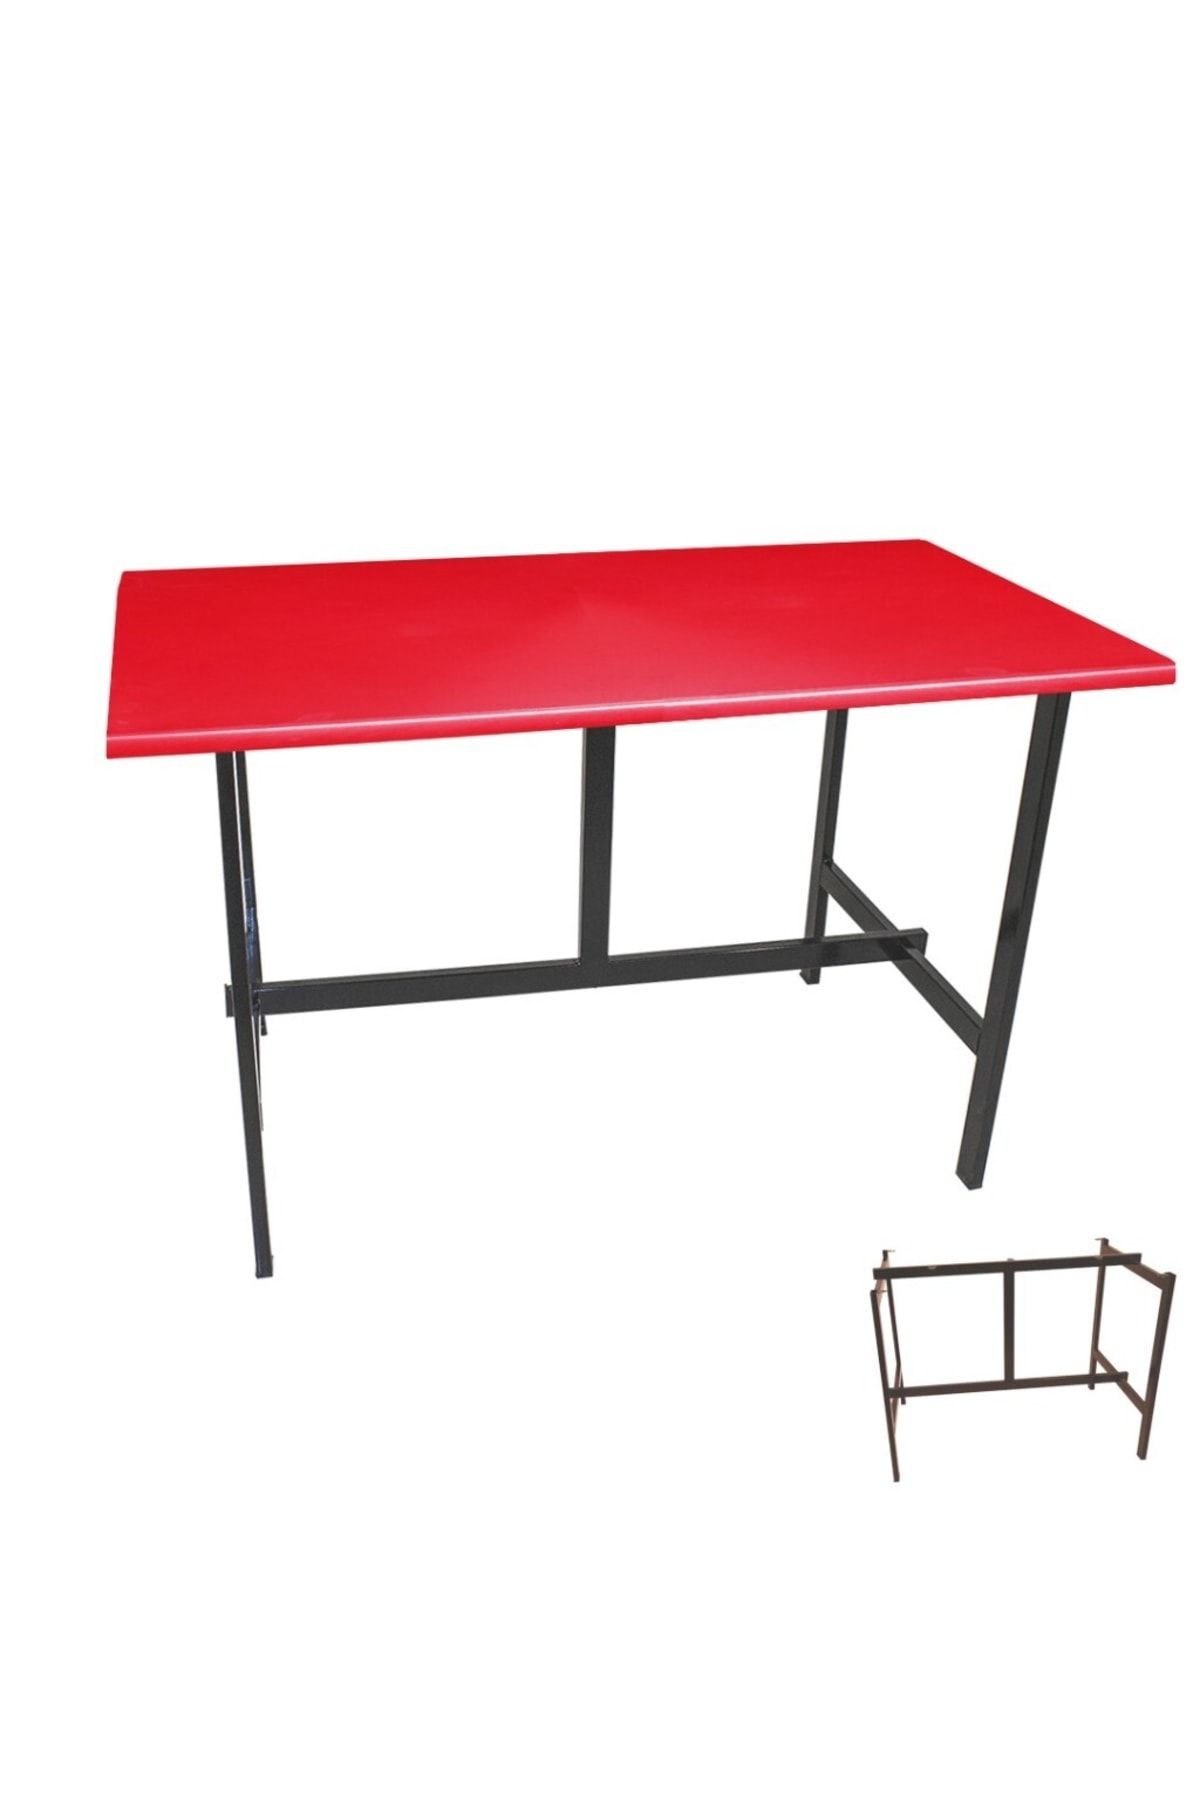 Dockers Capella Werzalit Mutfak Masası 80x140 (esb-sıyah) - Kırmızı